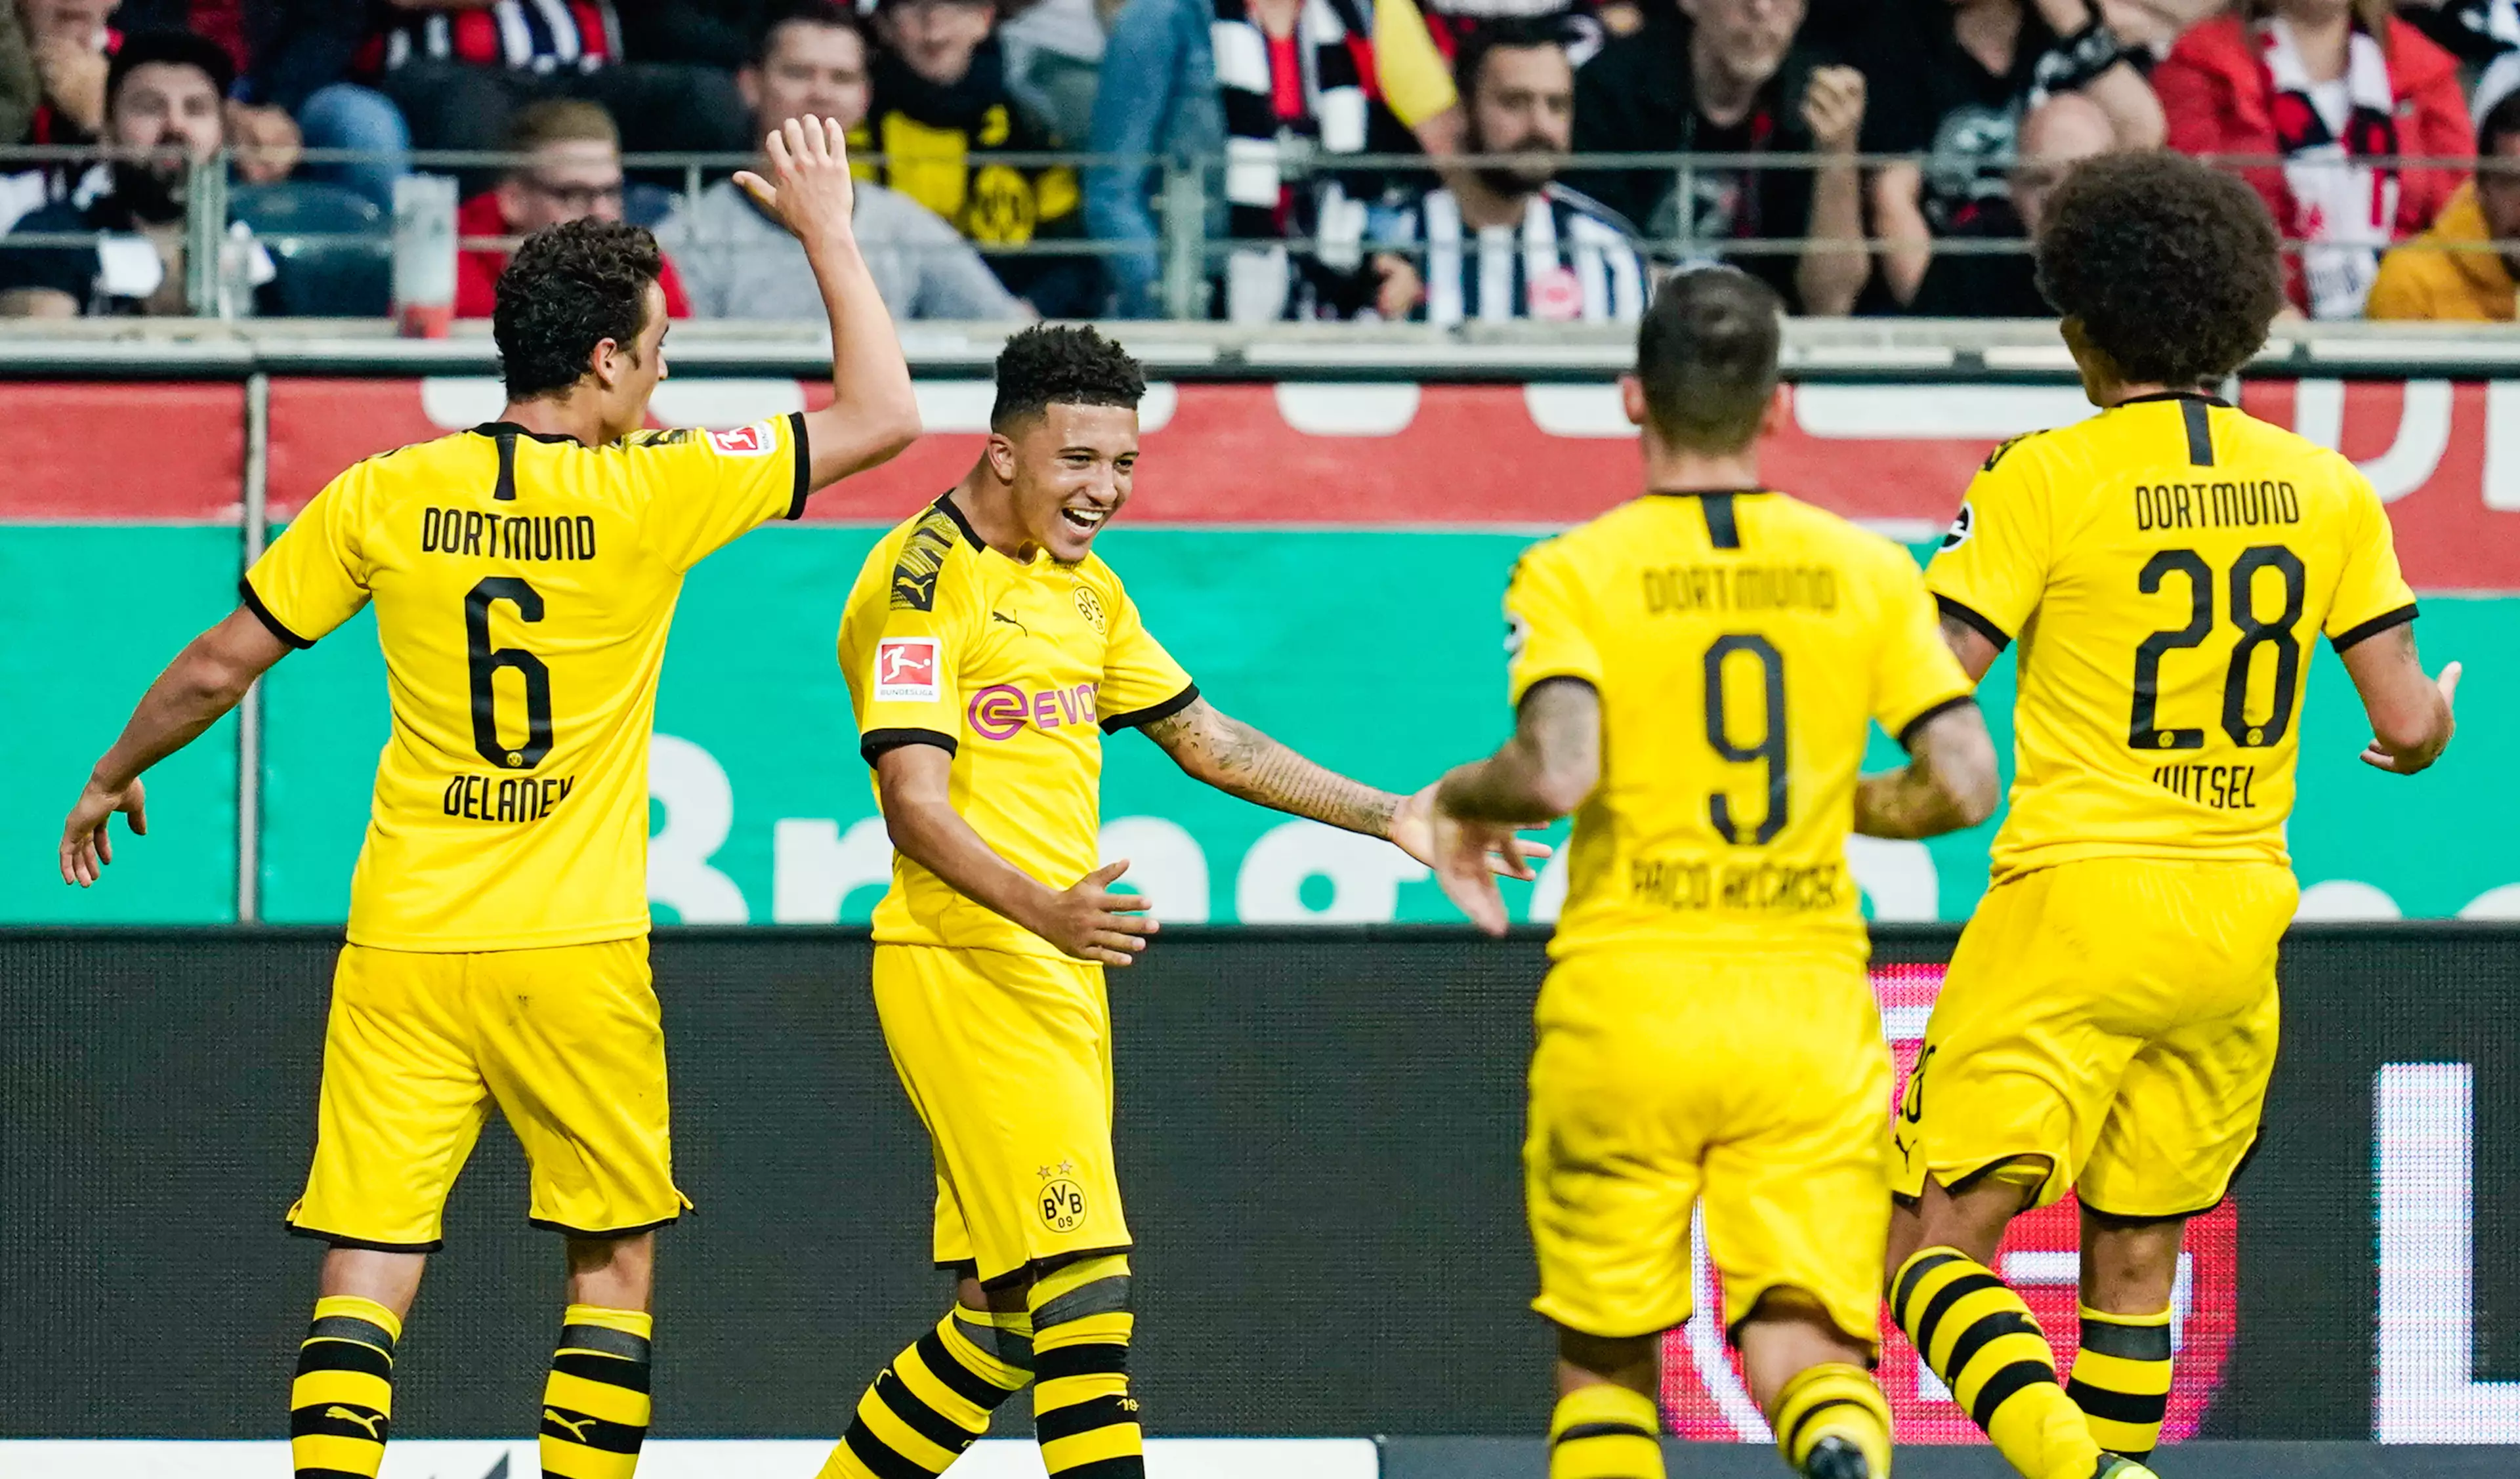 Jadon Sancho has been in excellent form for Borussia Dortmund this season